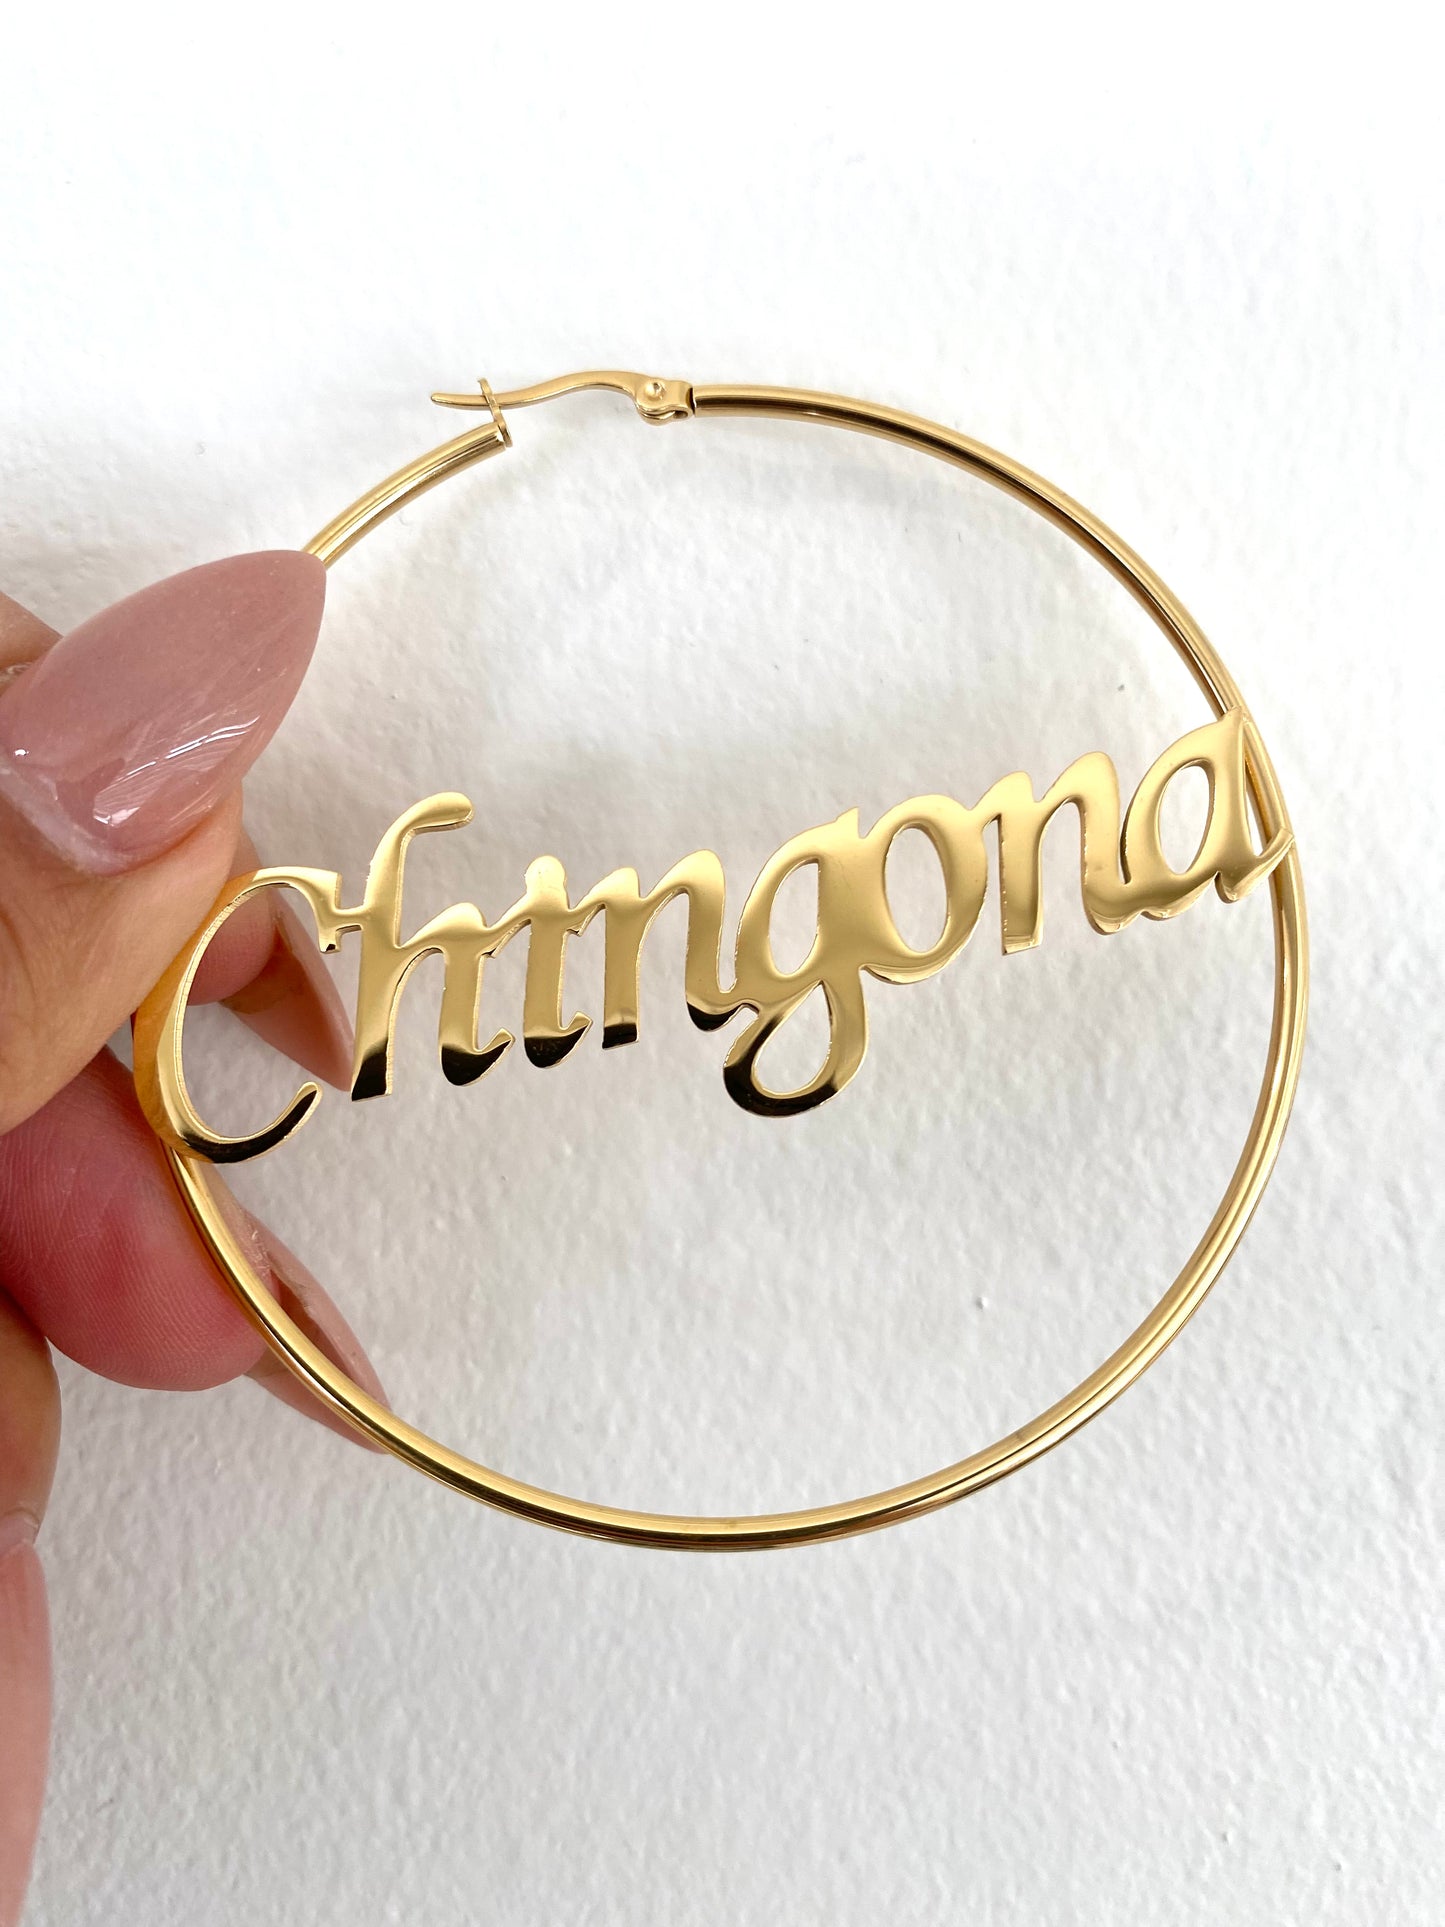 Chingona Earrings